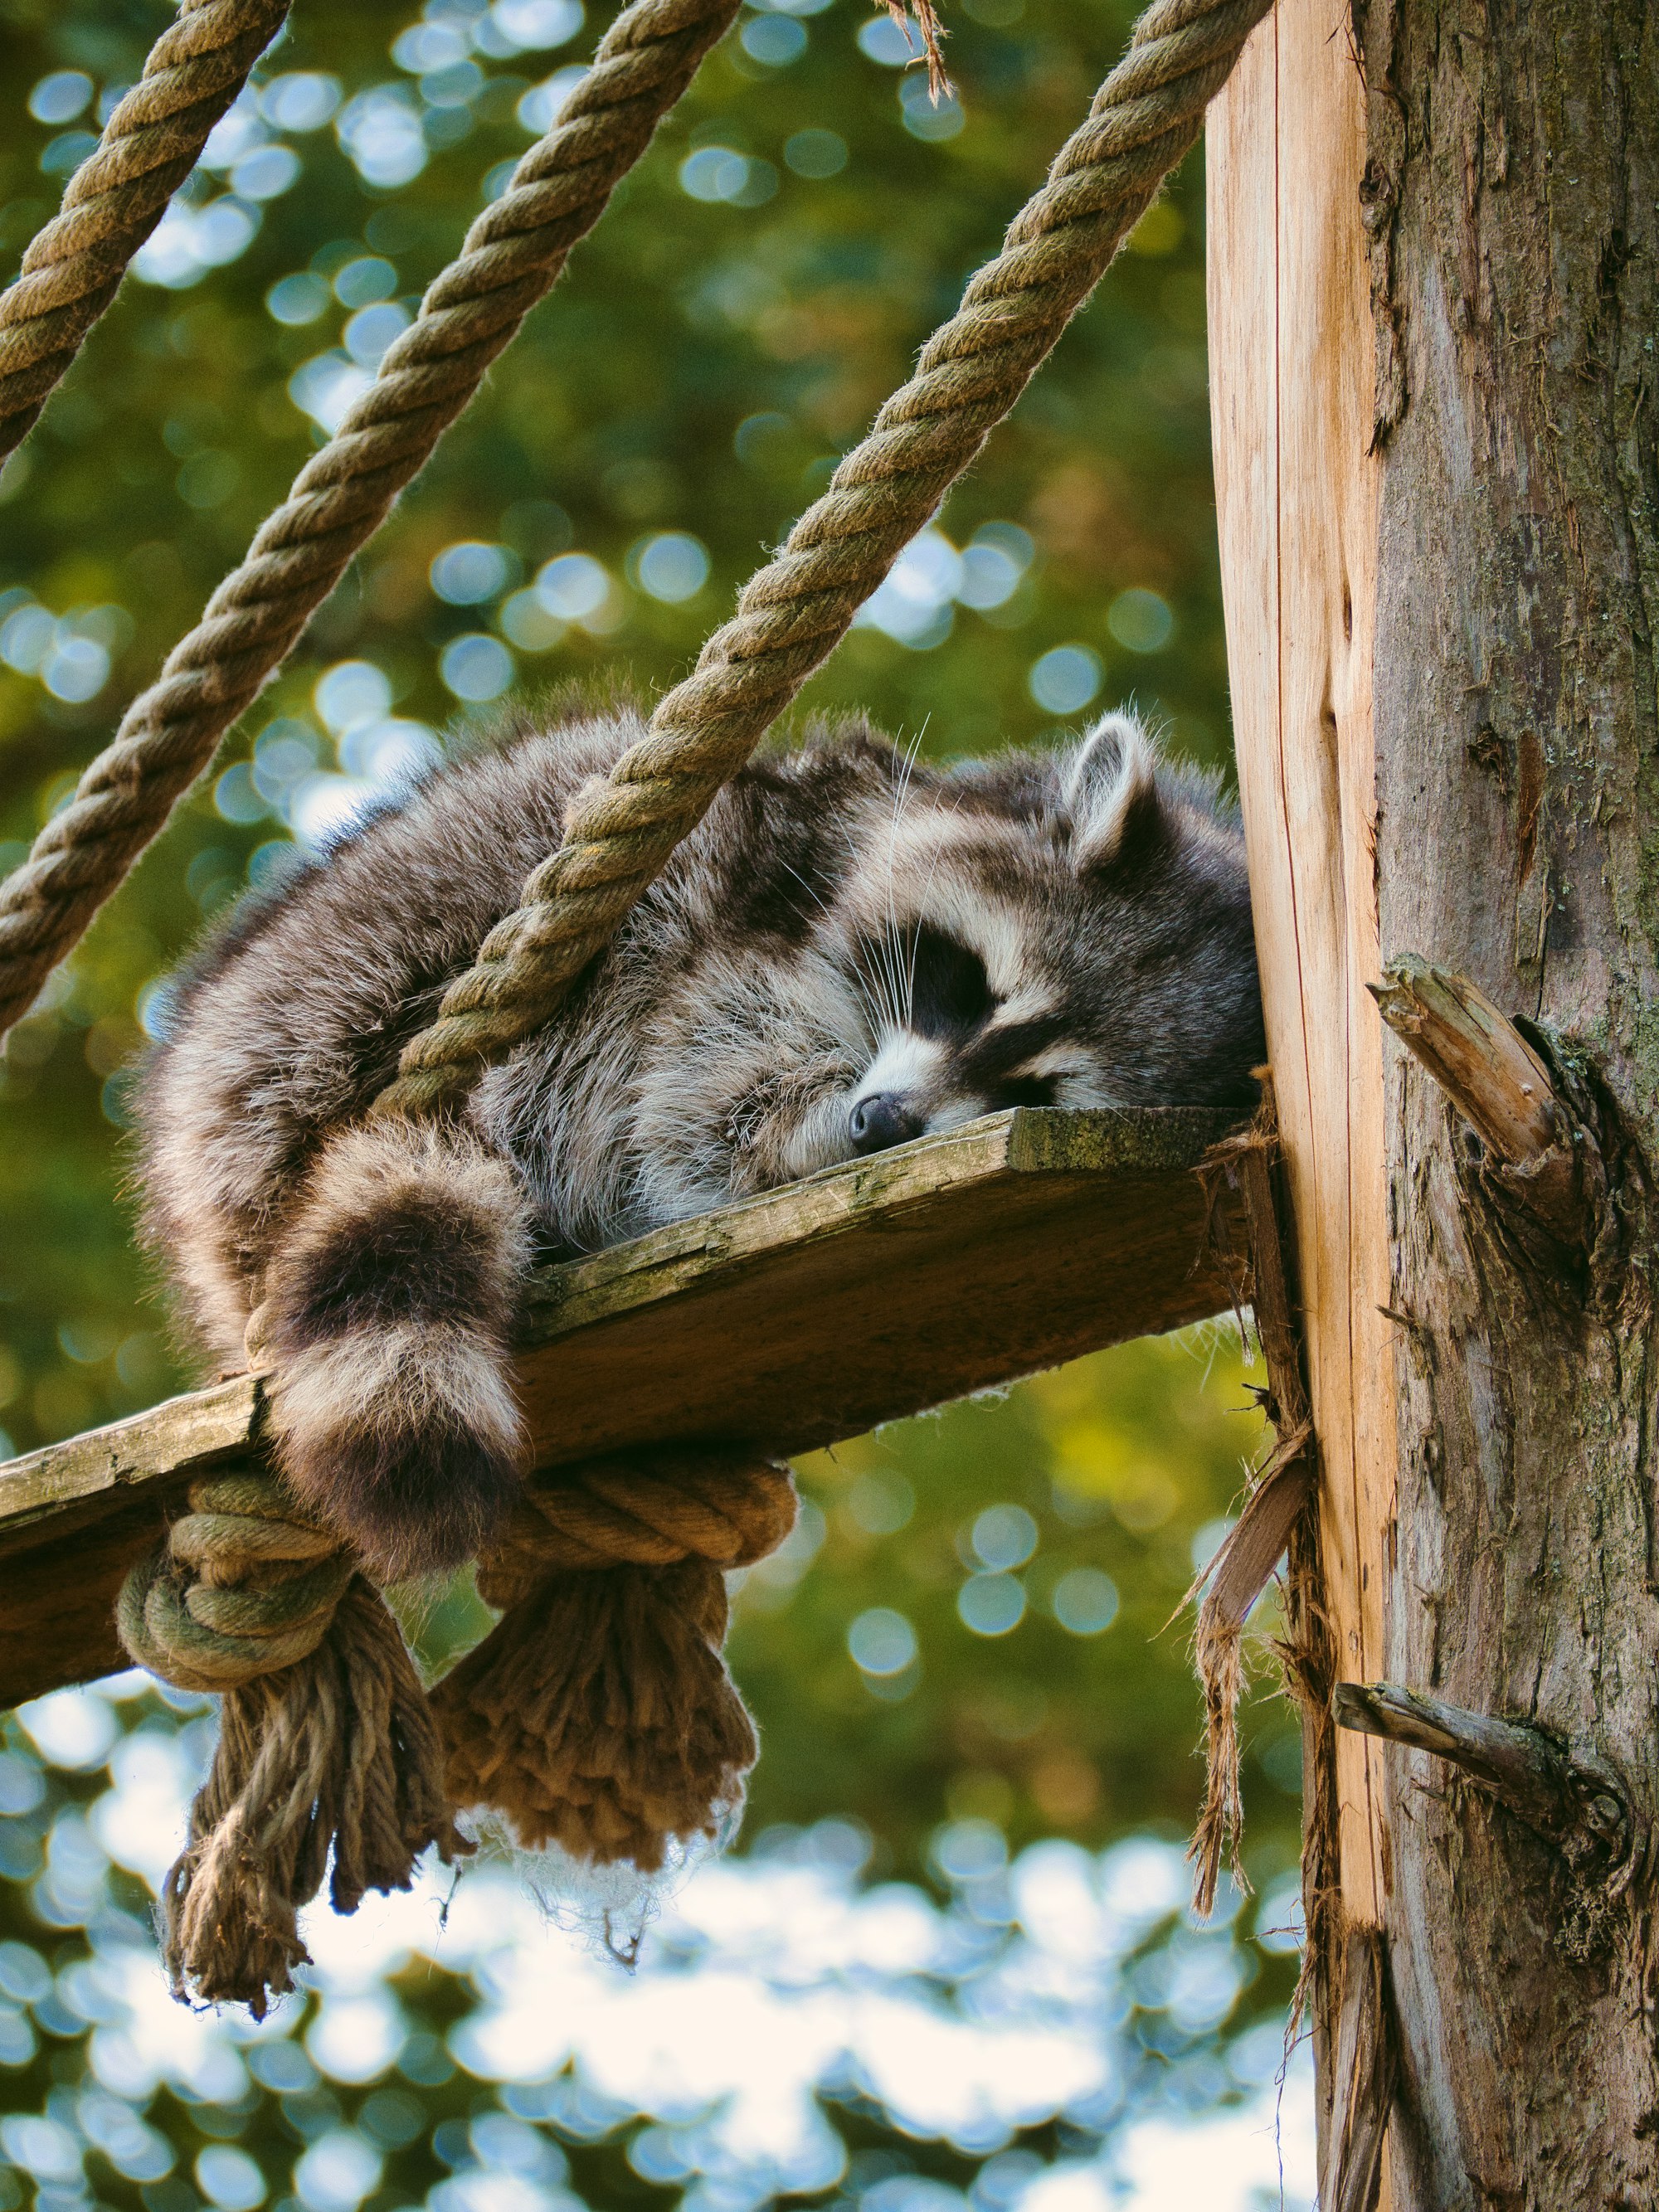 sleepy raccoon napping on a plank/swing